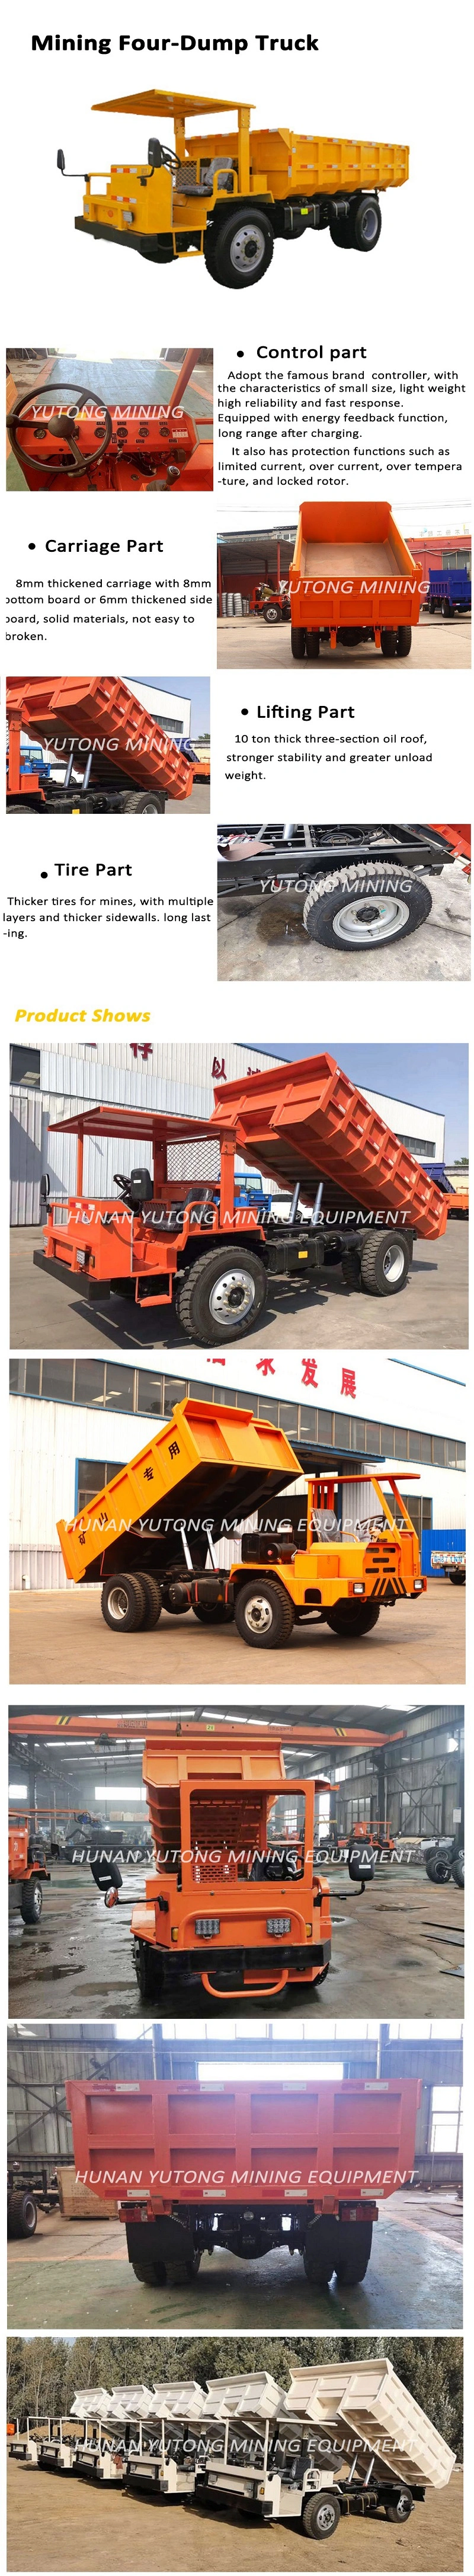 Factory Price 12 Ton Mining Transportation Dump Truck/Mining and Tunnel Dump Truck